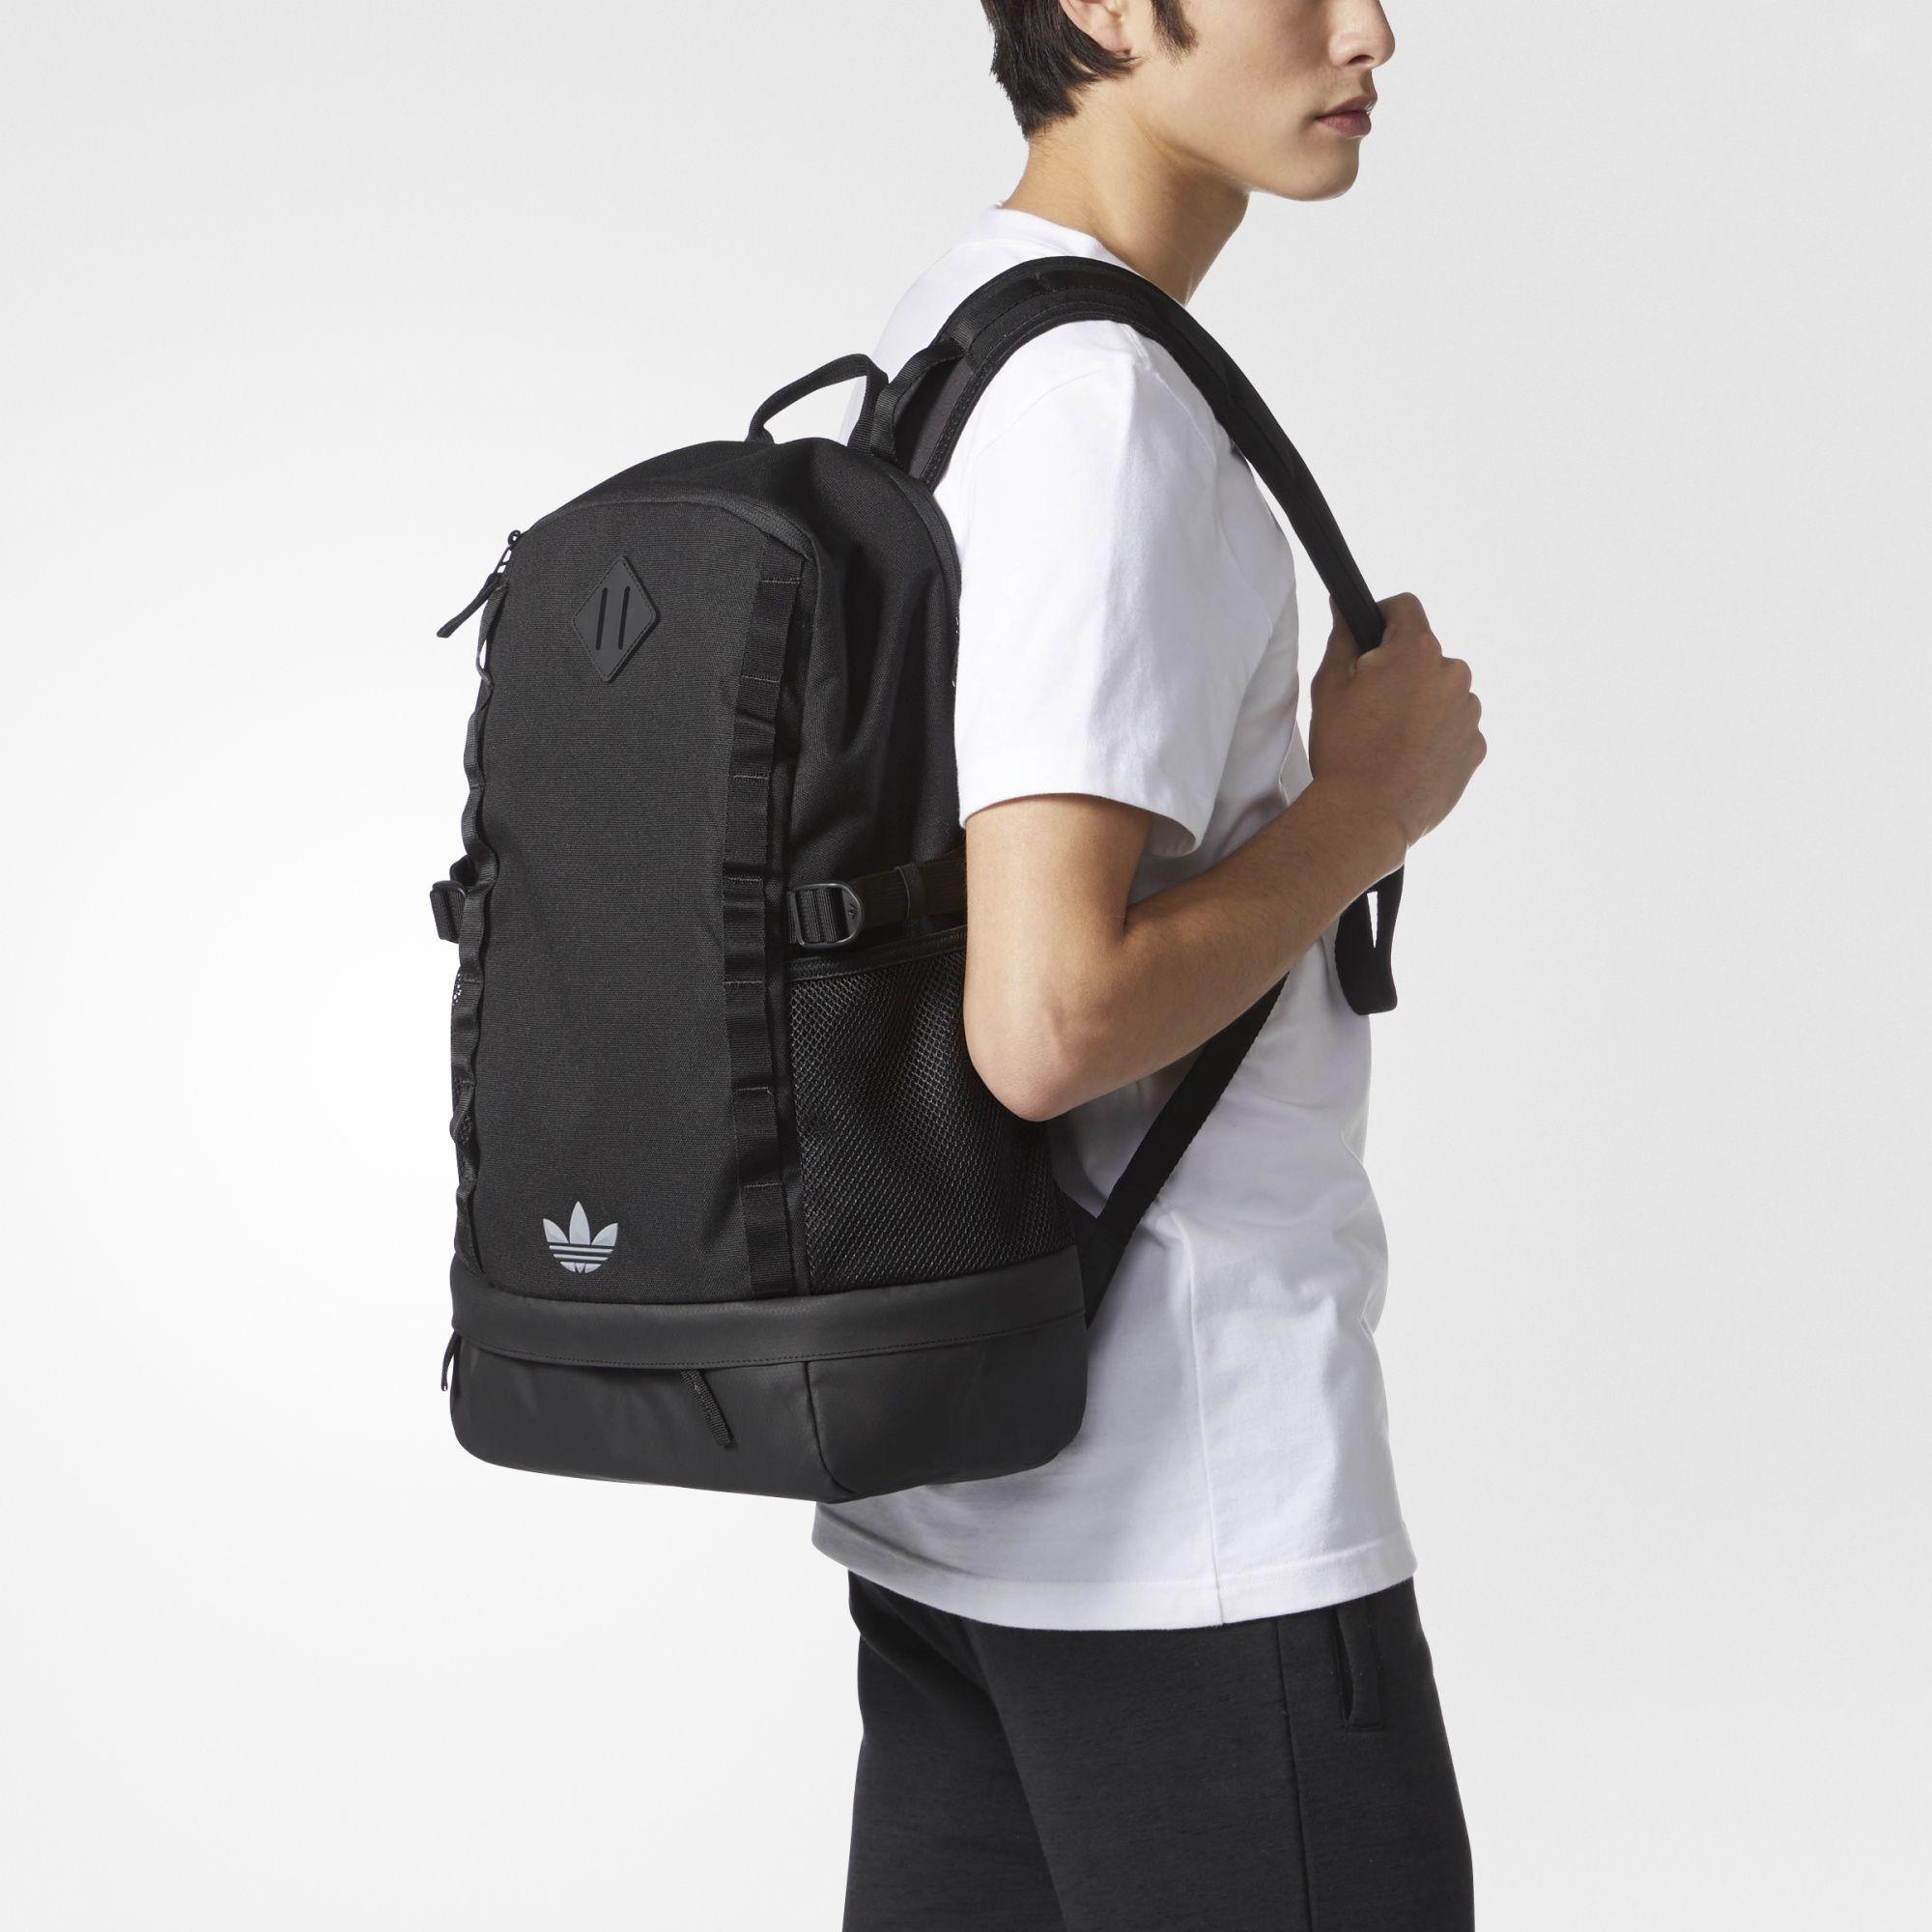 Adidas Originals Create 2 Backpack In 